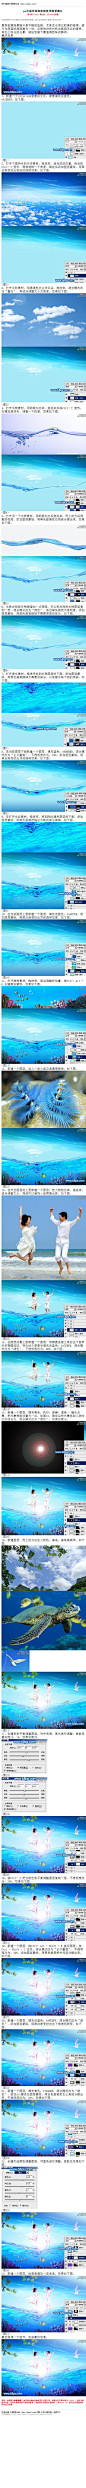 《ps合成非常清爽的夏季海景婚片》  夏季拍摄海景婚片是不错的选择，尤其在水质比较清的海滩，蓝天与湛蓝的海面融为一体，点缀的白色衬托出画面无比的清爽，再加上阳光的光晕，将给您留下最值得回味的瞬间。 #www.16xx8.com##ps##photoshop##教程##ps教程##I照片合成I#：http://www.16xx8.com/plus/view.php?aid=112738&pageno=all